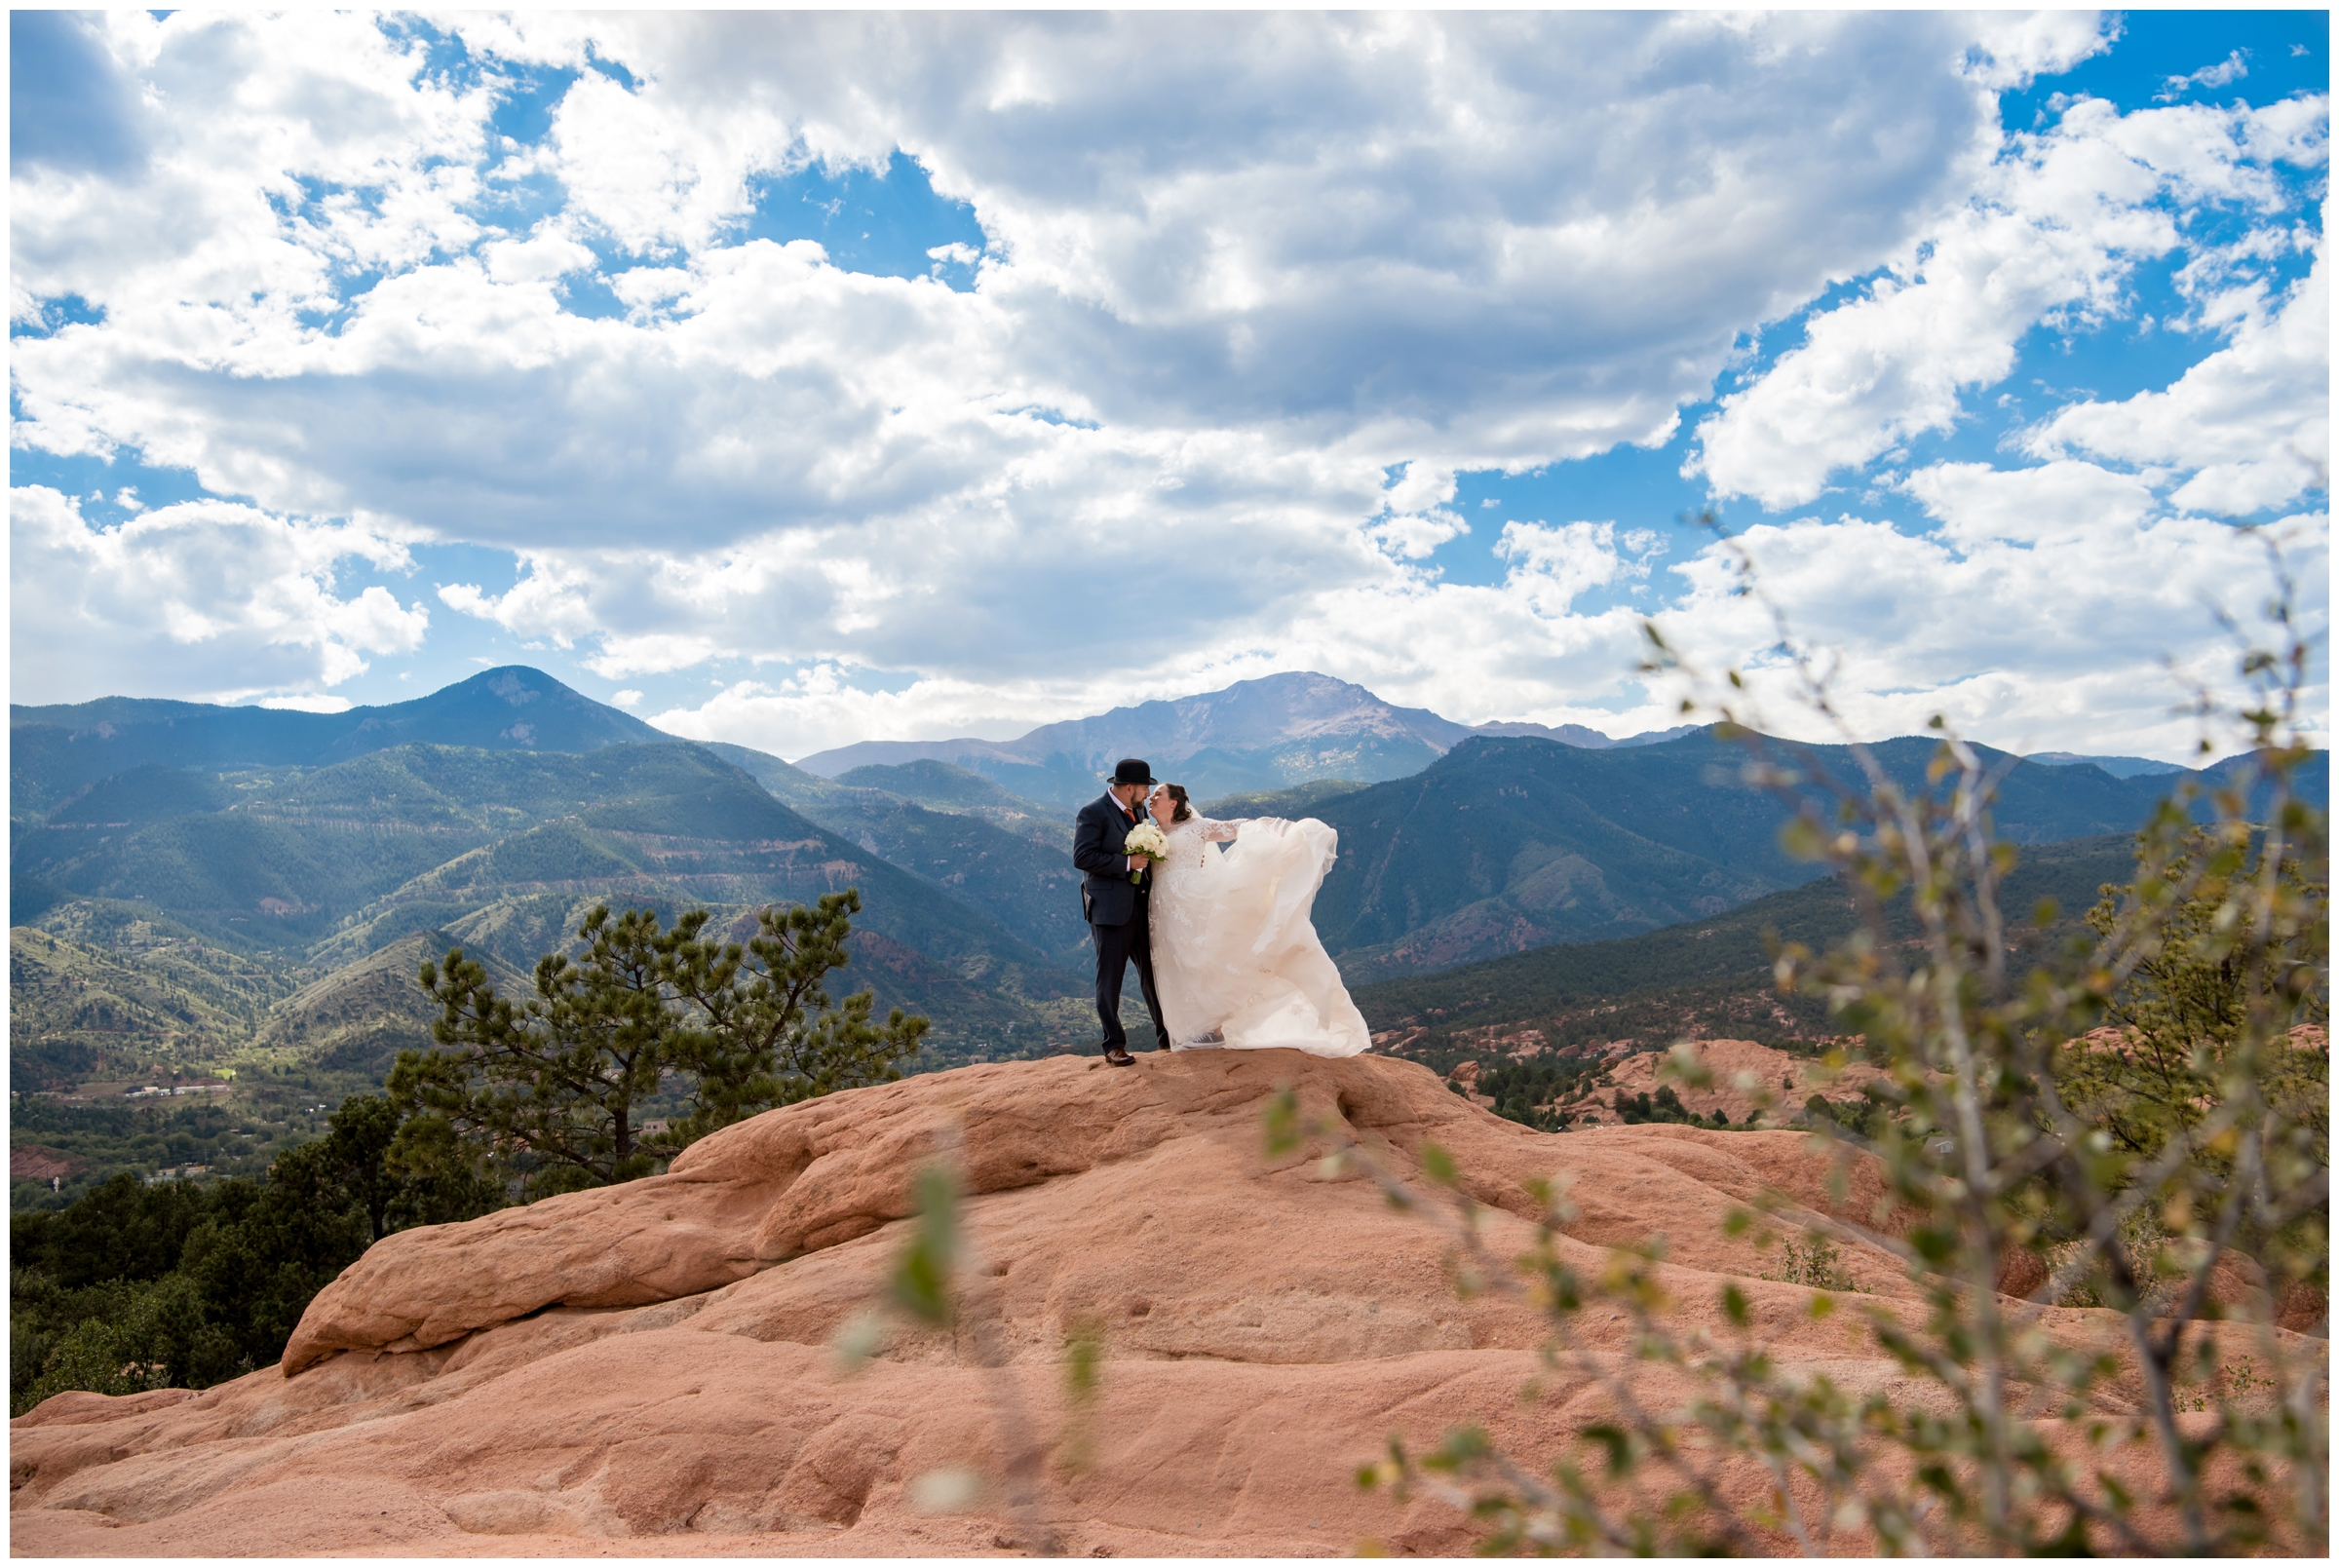 Wedding photos at Garden of the Gods Park by Colorado Springs photographer Plum Pretty Photography